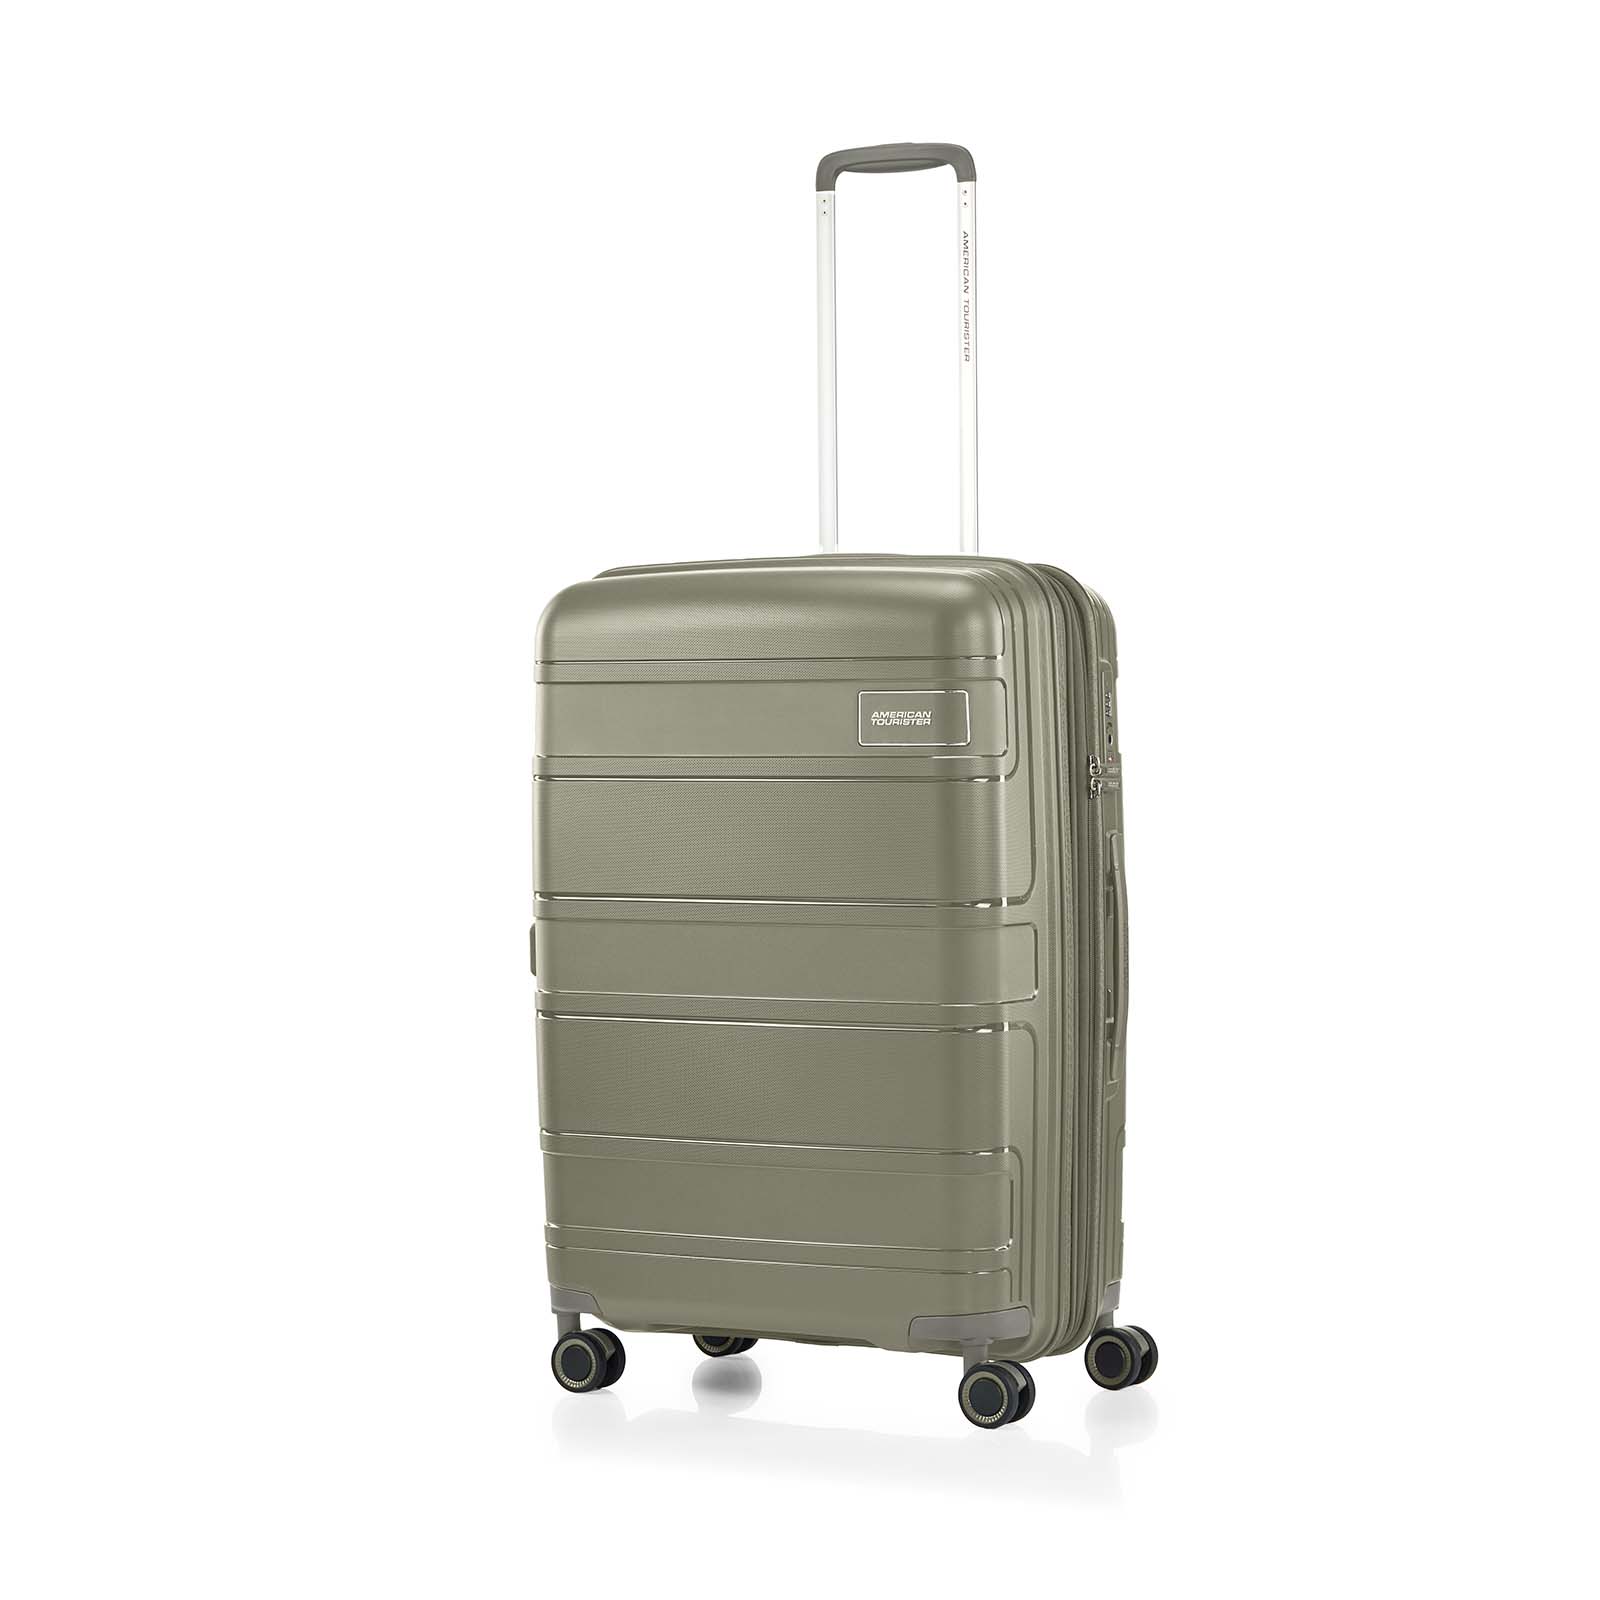 American-Tourister-Light-Max-69cm-Suitcase-Khaki-Angle